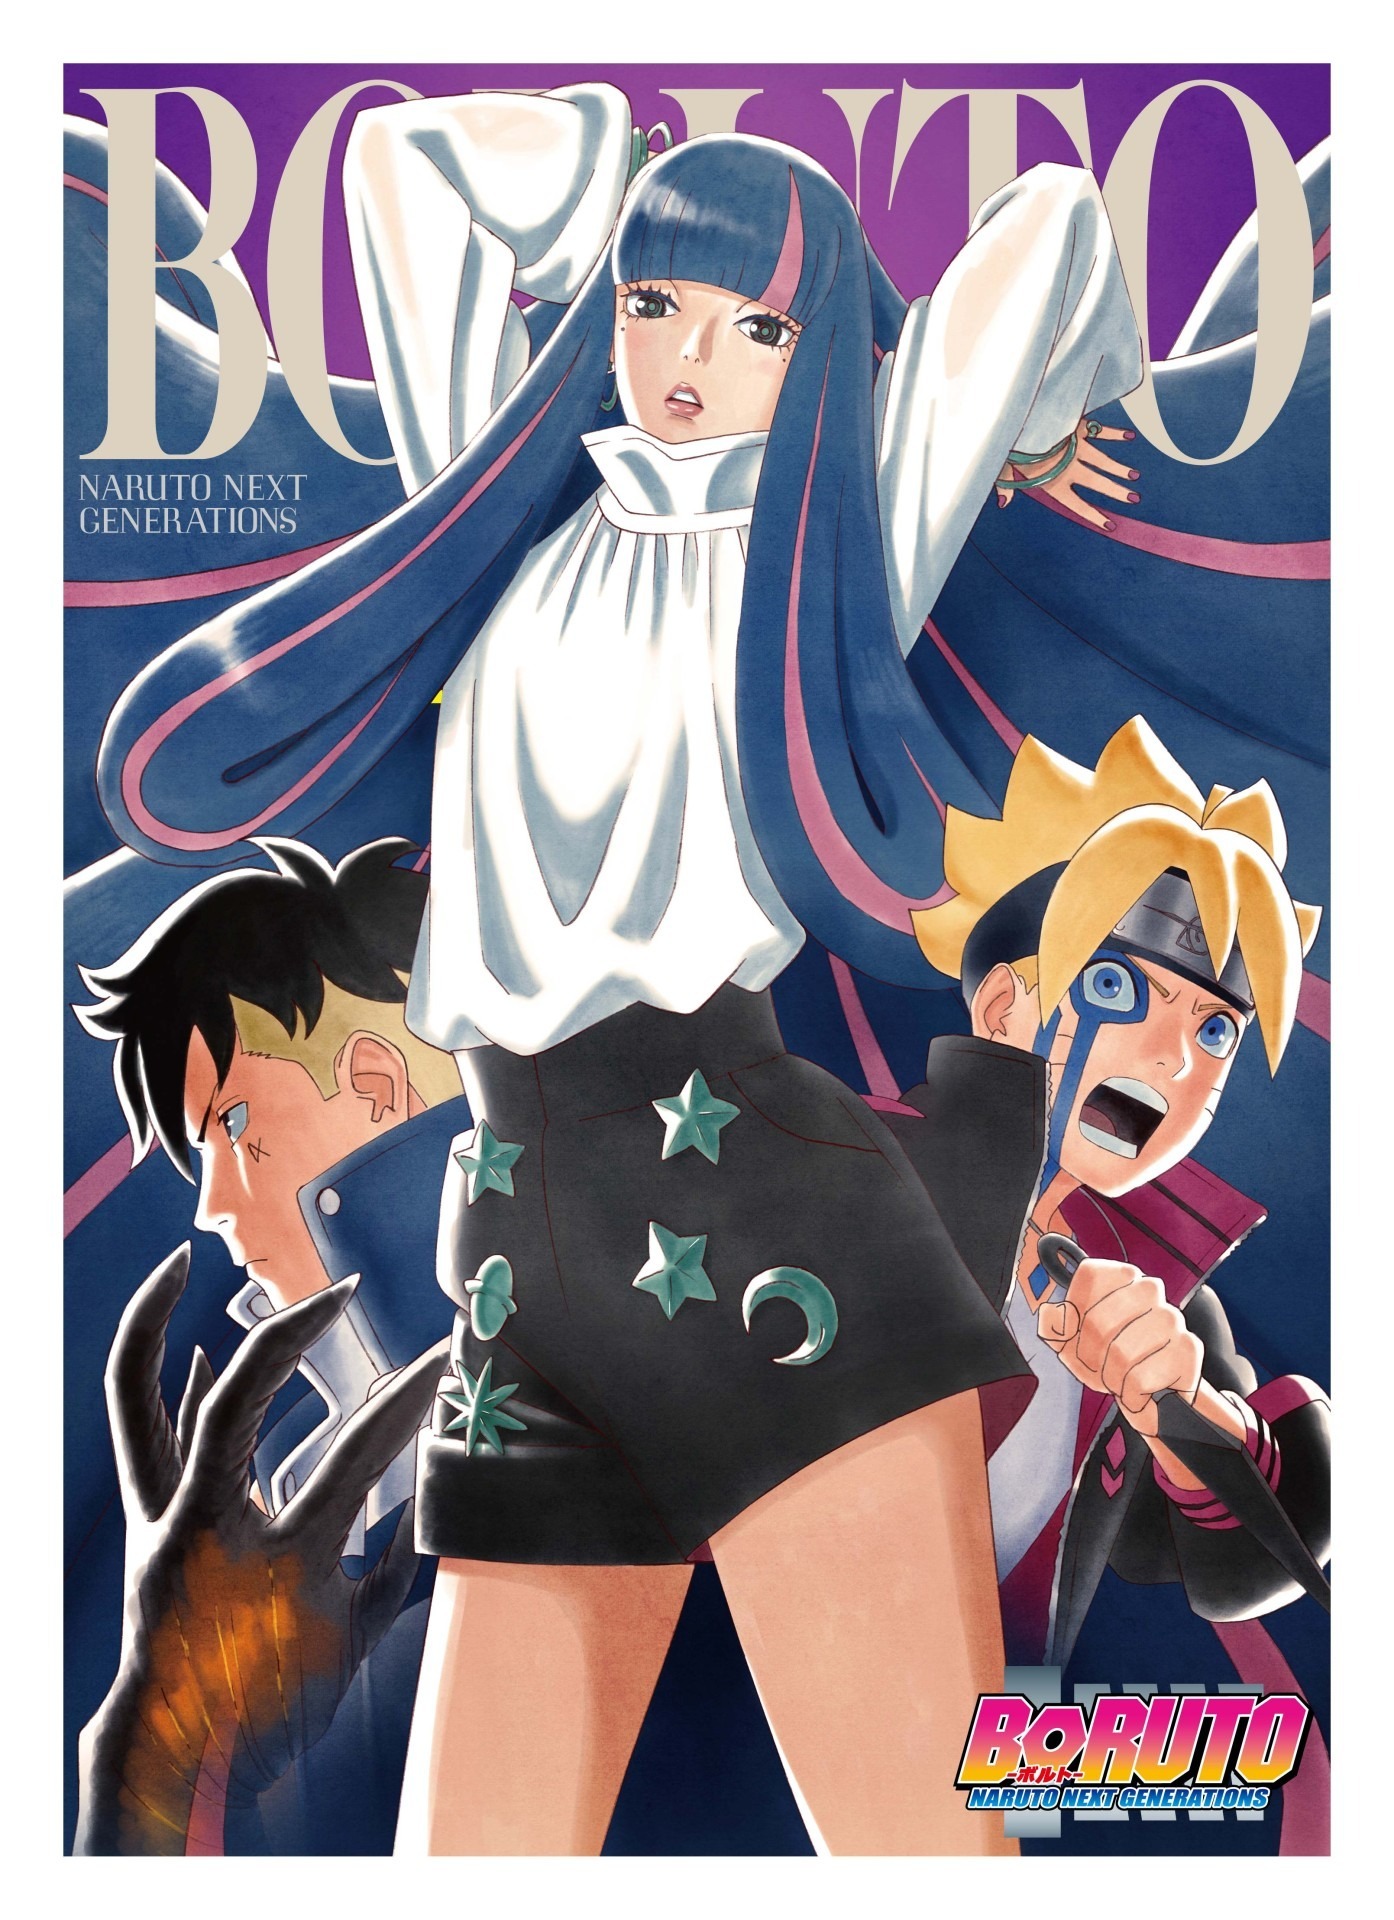 Boruto Anime Heads into New Arc in Latest Visual